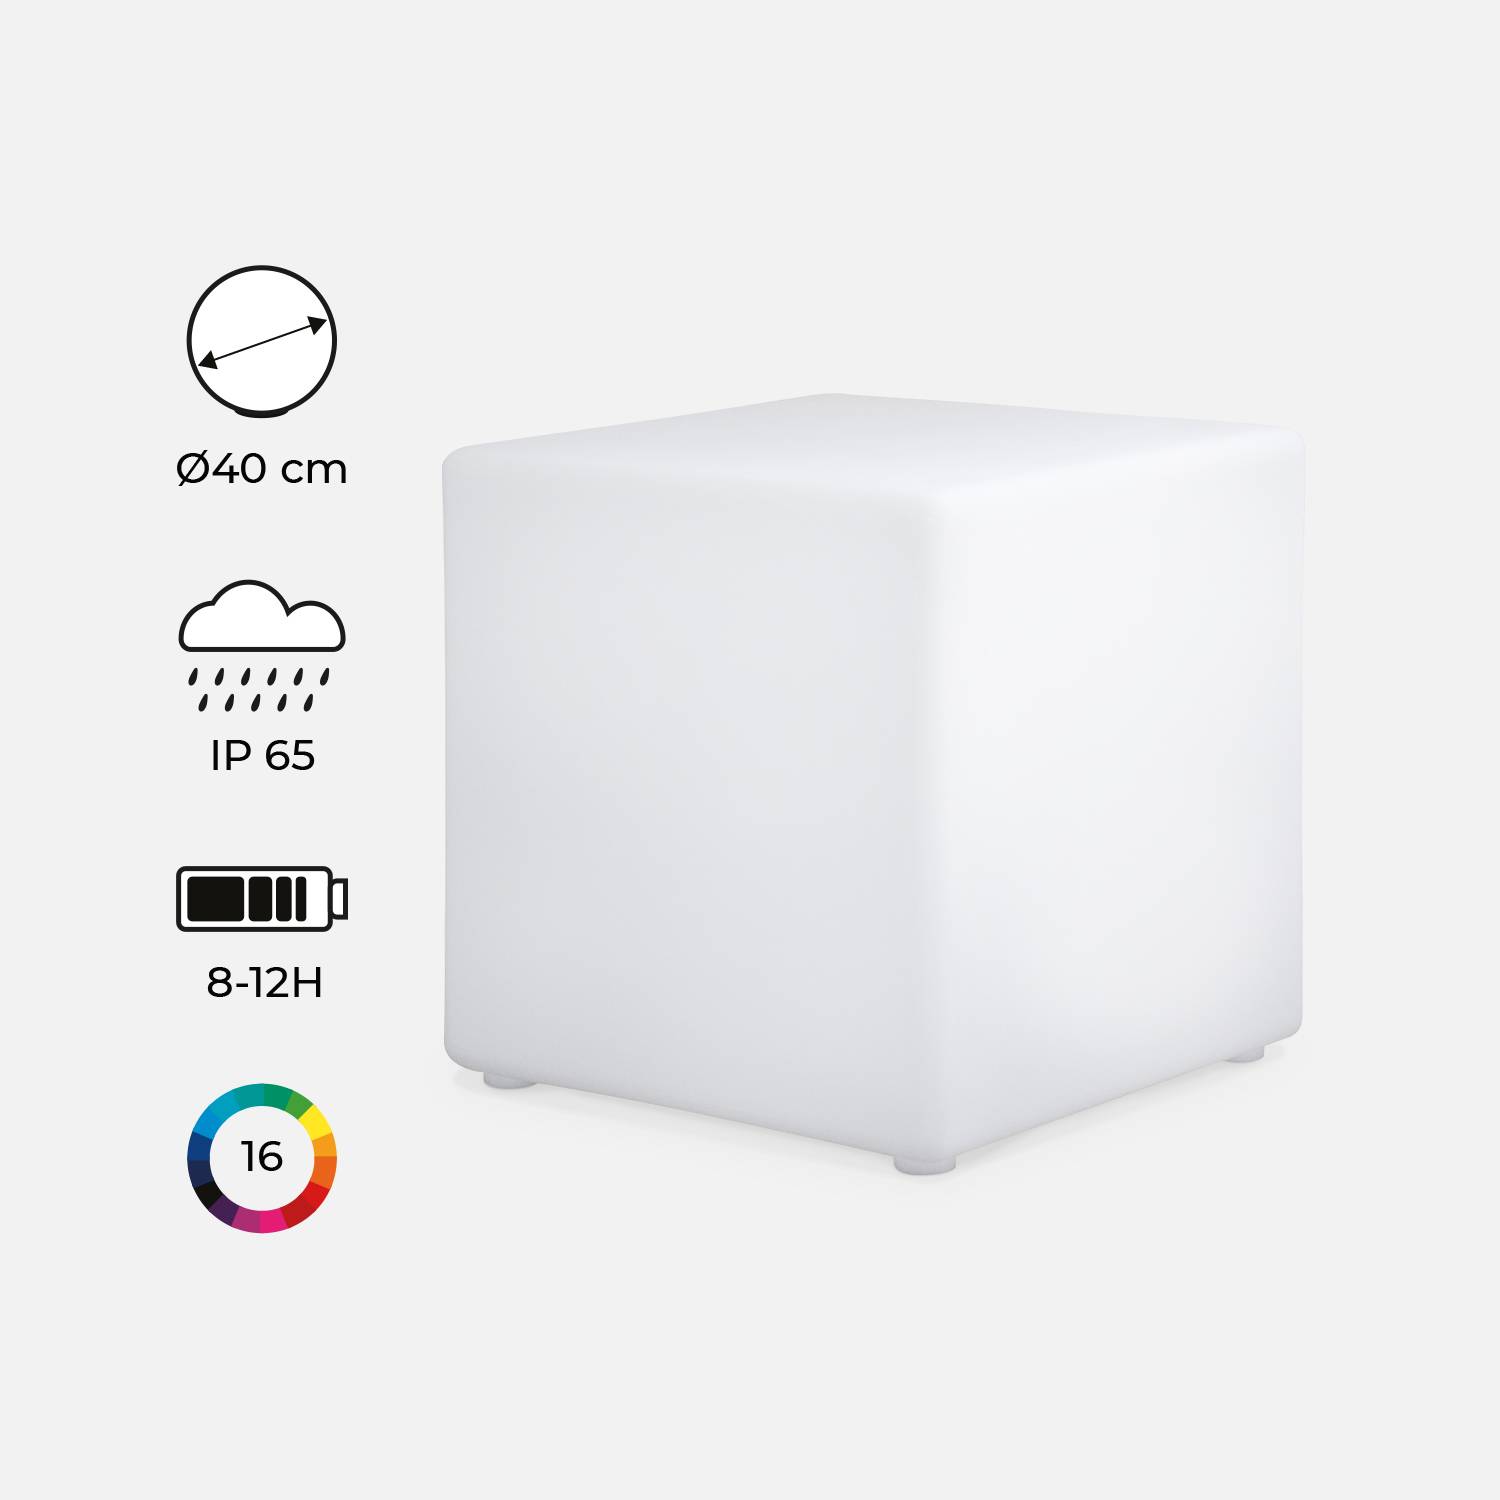 Cubo luminoso LED multicolor recargable sin cables para exterior  - 16 colores  - CUBO LED 40cm Photo2